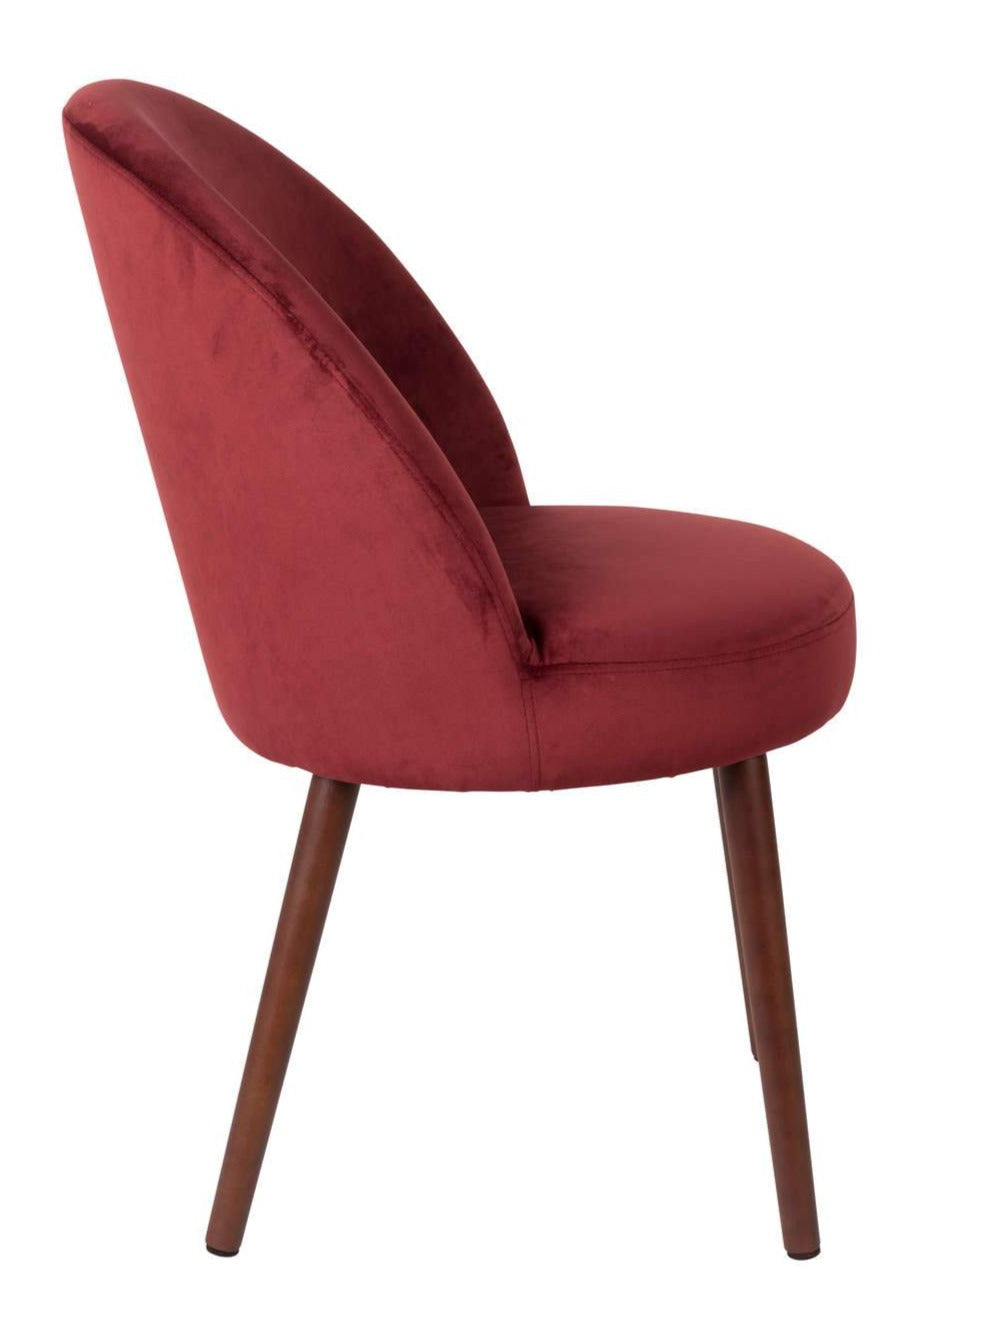 BARBARA chair red, Dutchbone, Eye on Design